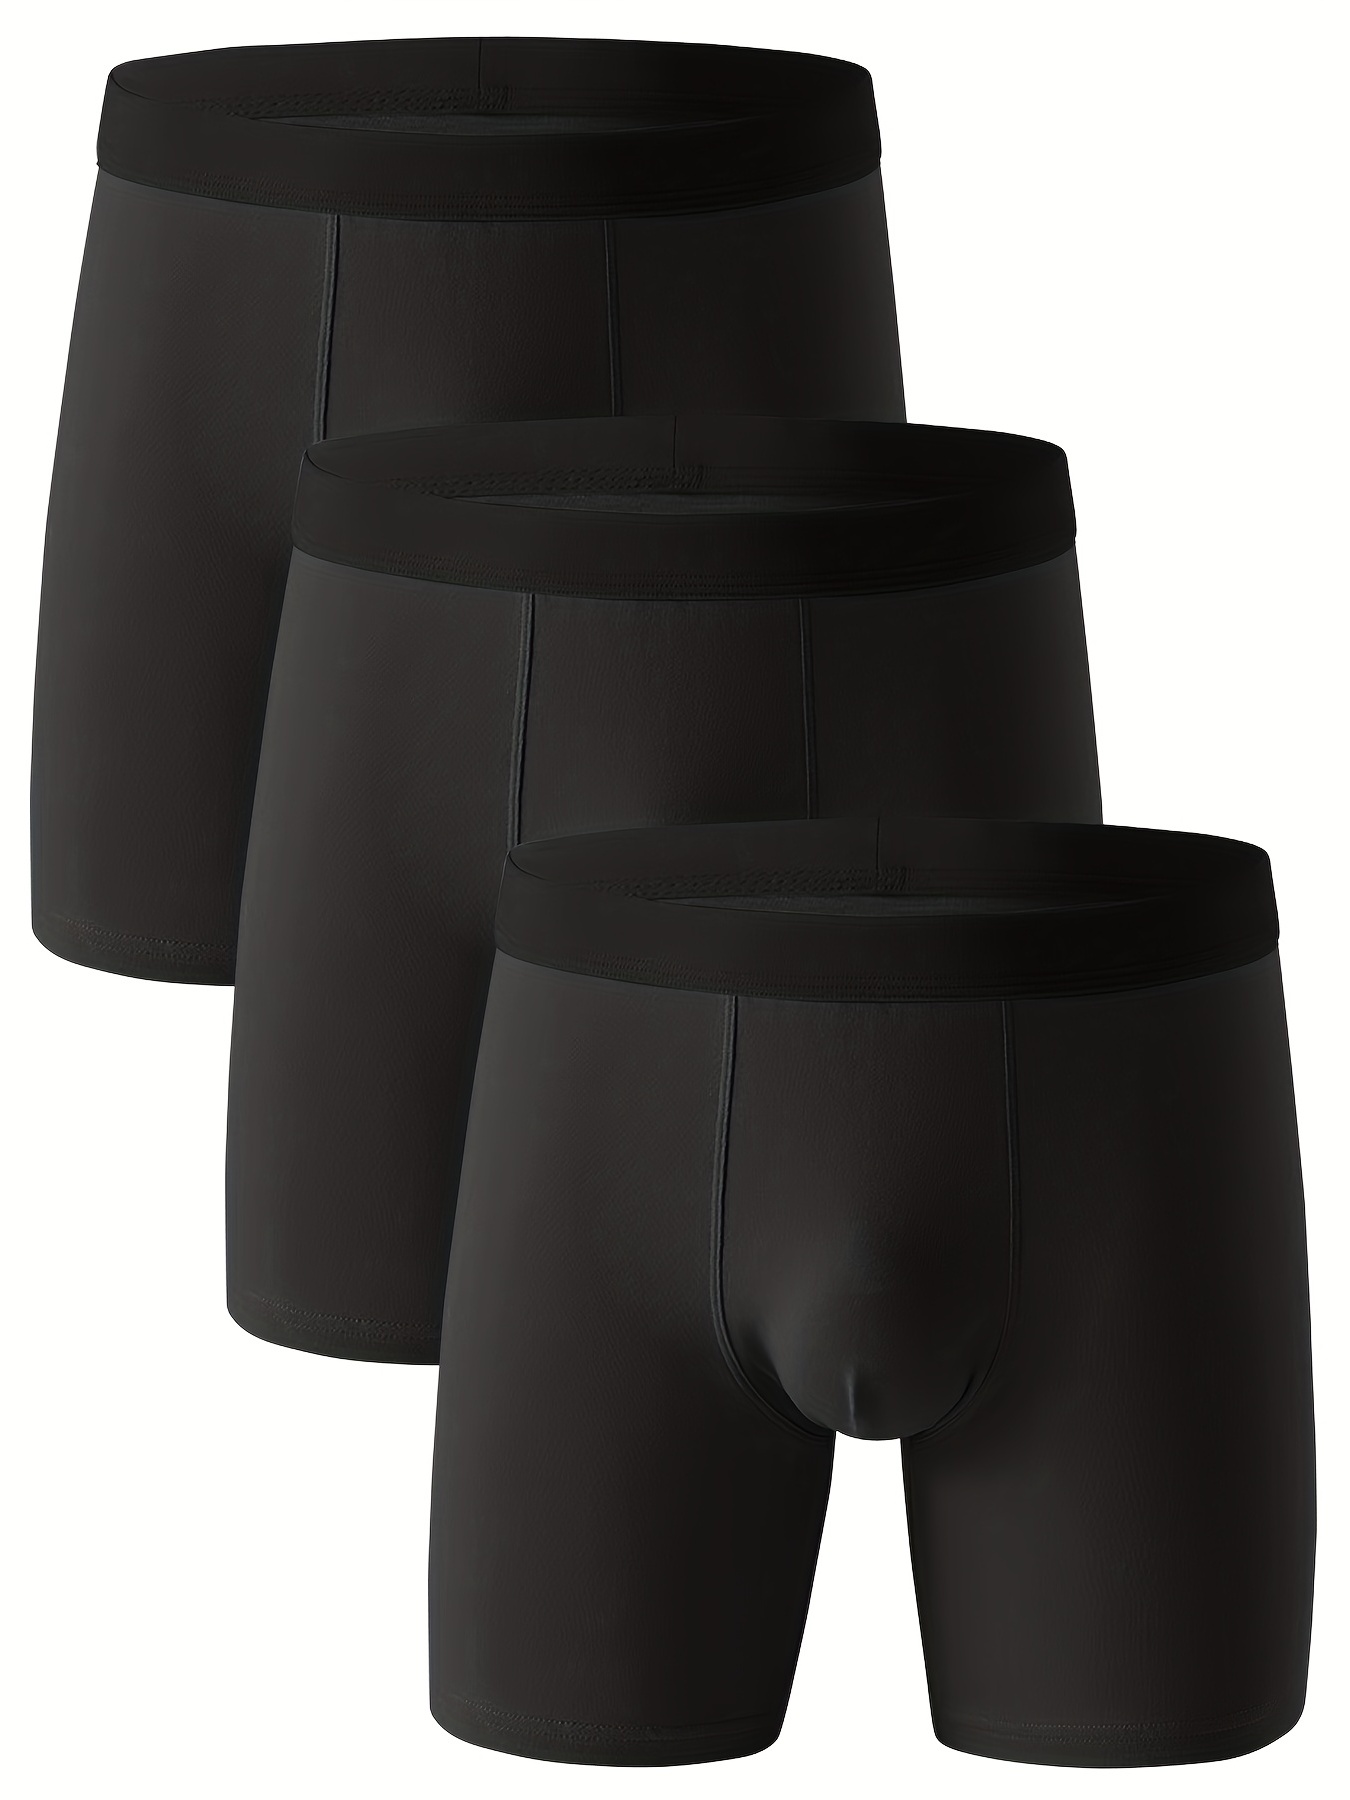 Copper Power Mens Boxer Briefs Breathable Cotton Underwear for Men - 6 Pack  - Cotton Stretch Mens Underwear (Medium, Black) at  Men's Clothing  store